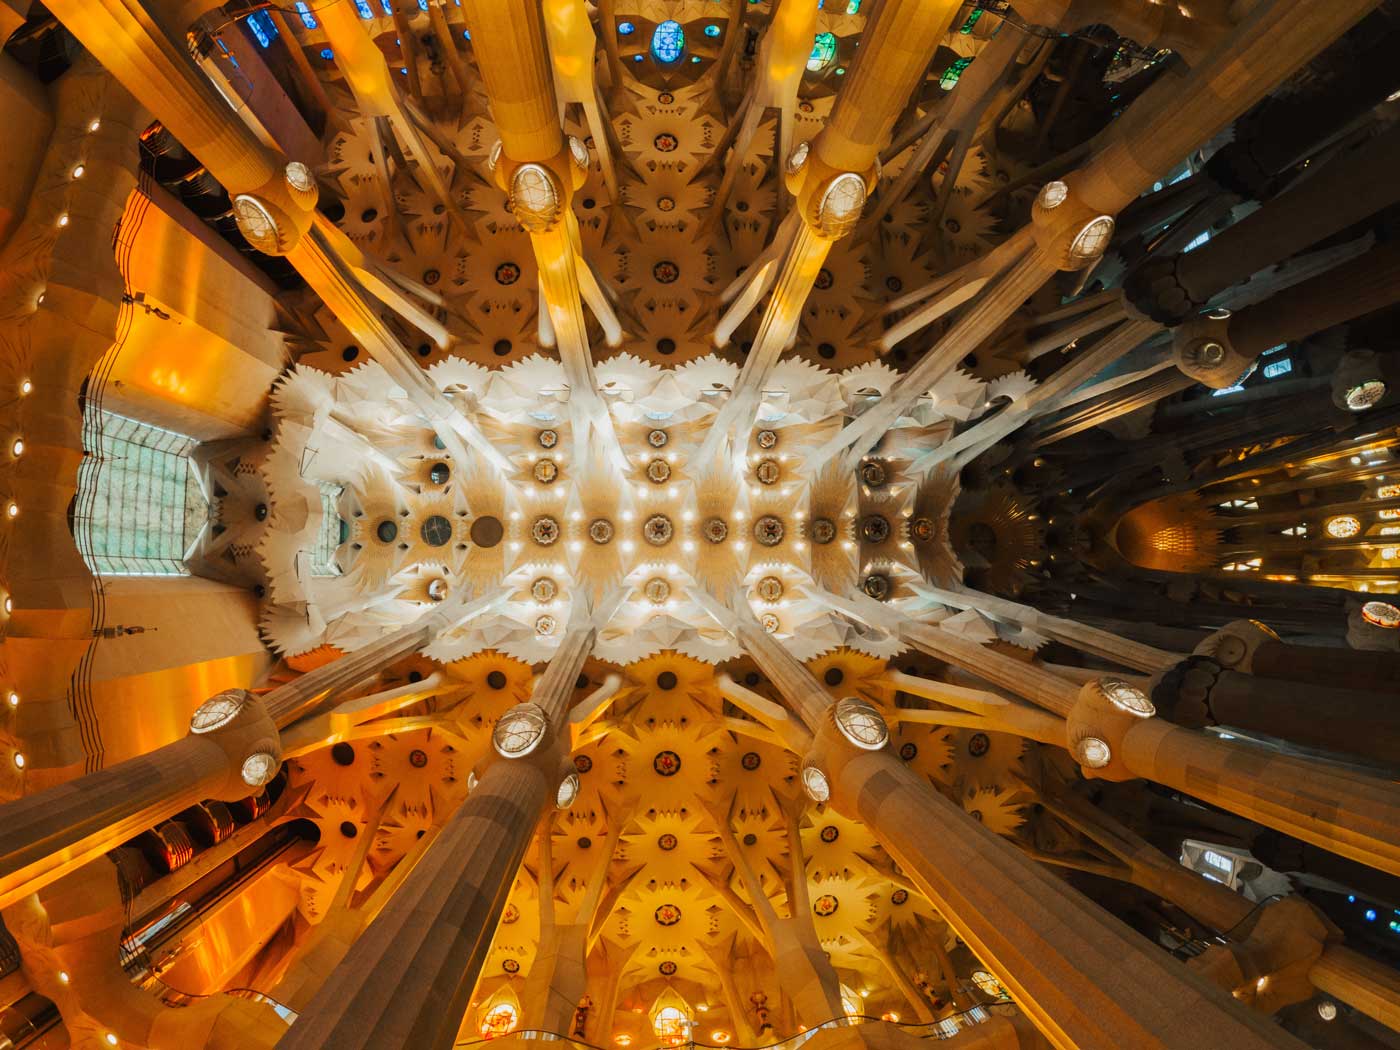 Gaudi Masterpiece Sagrada Familia Basilica - View of the interior